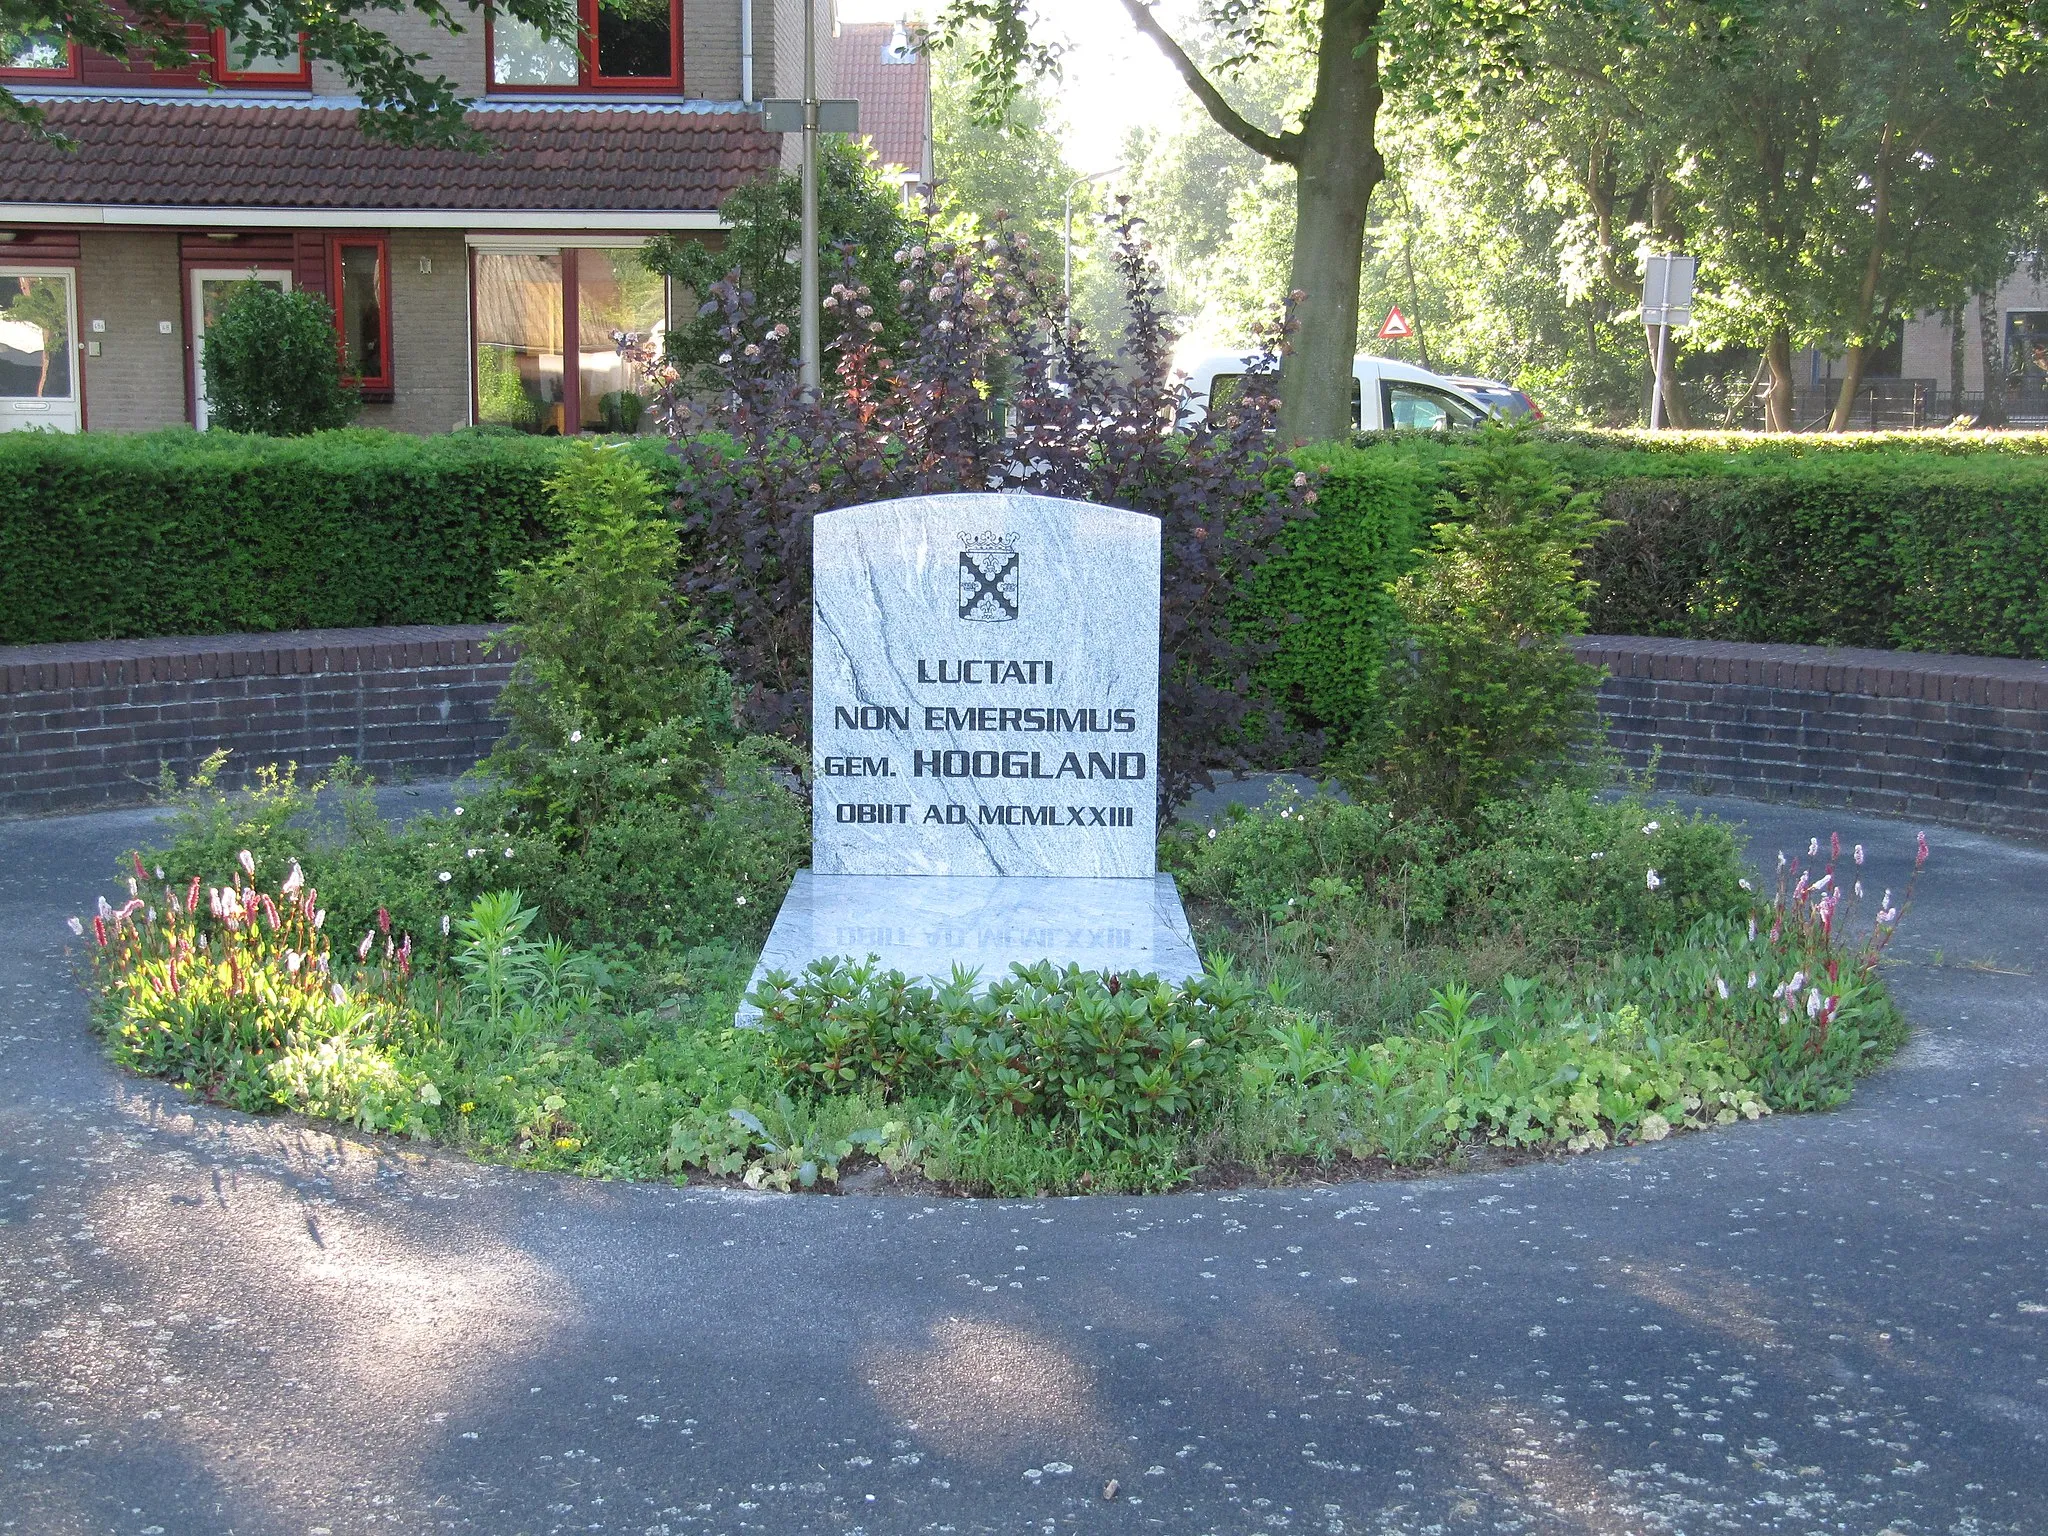 Photo showing: Tombstone Municipality of Hoogland on the Zevenhuizerstraat in Hoogland, municipality of Amersfoort, The Netherlands